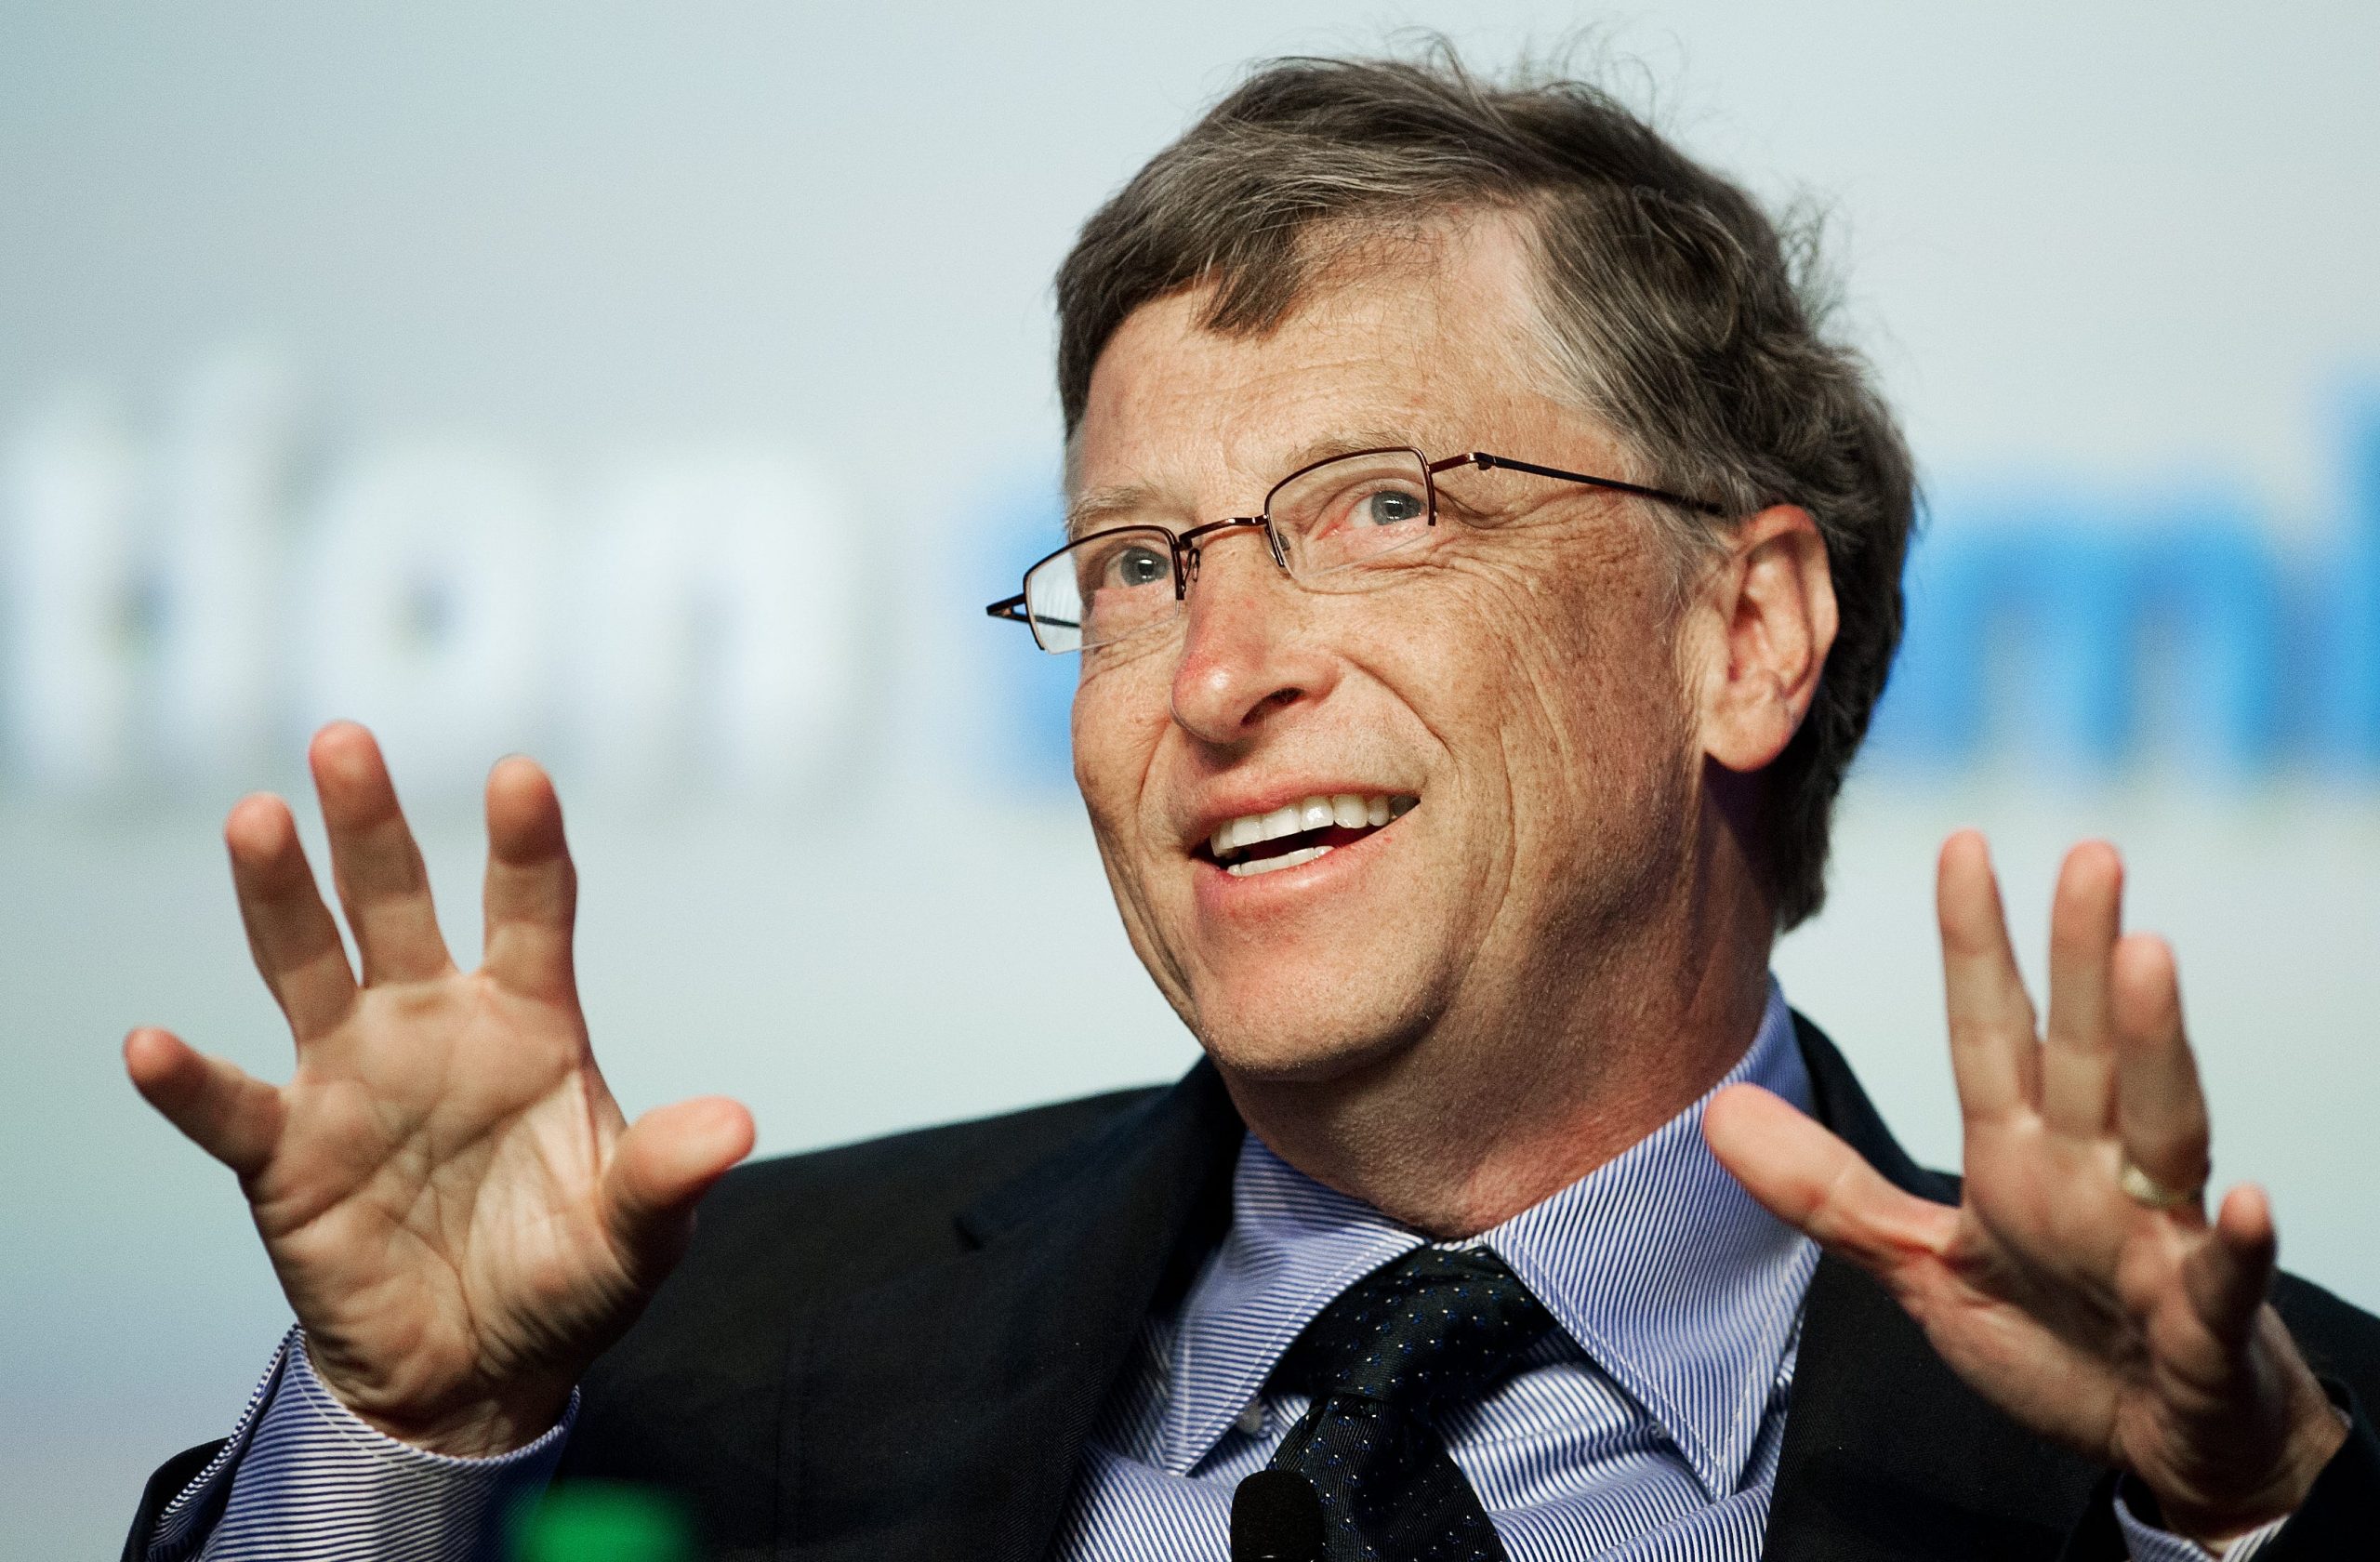 Billl Gates